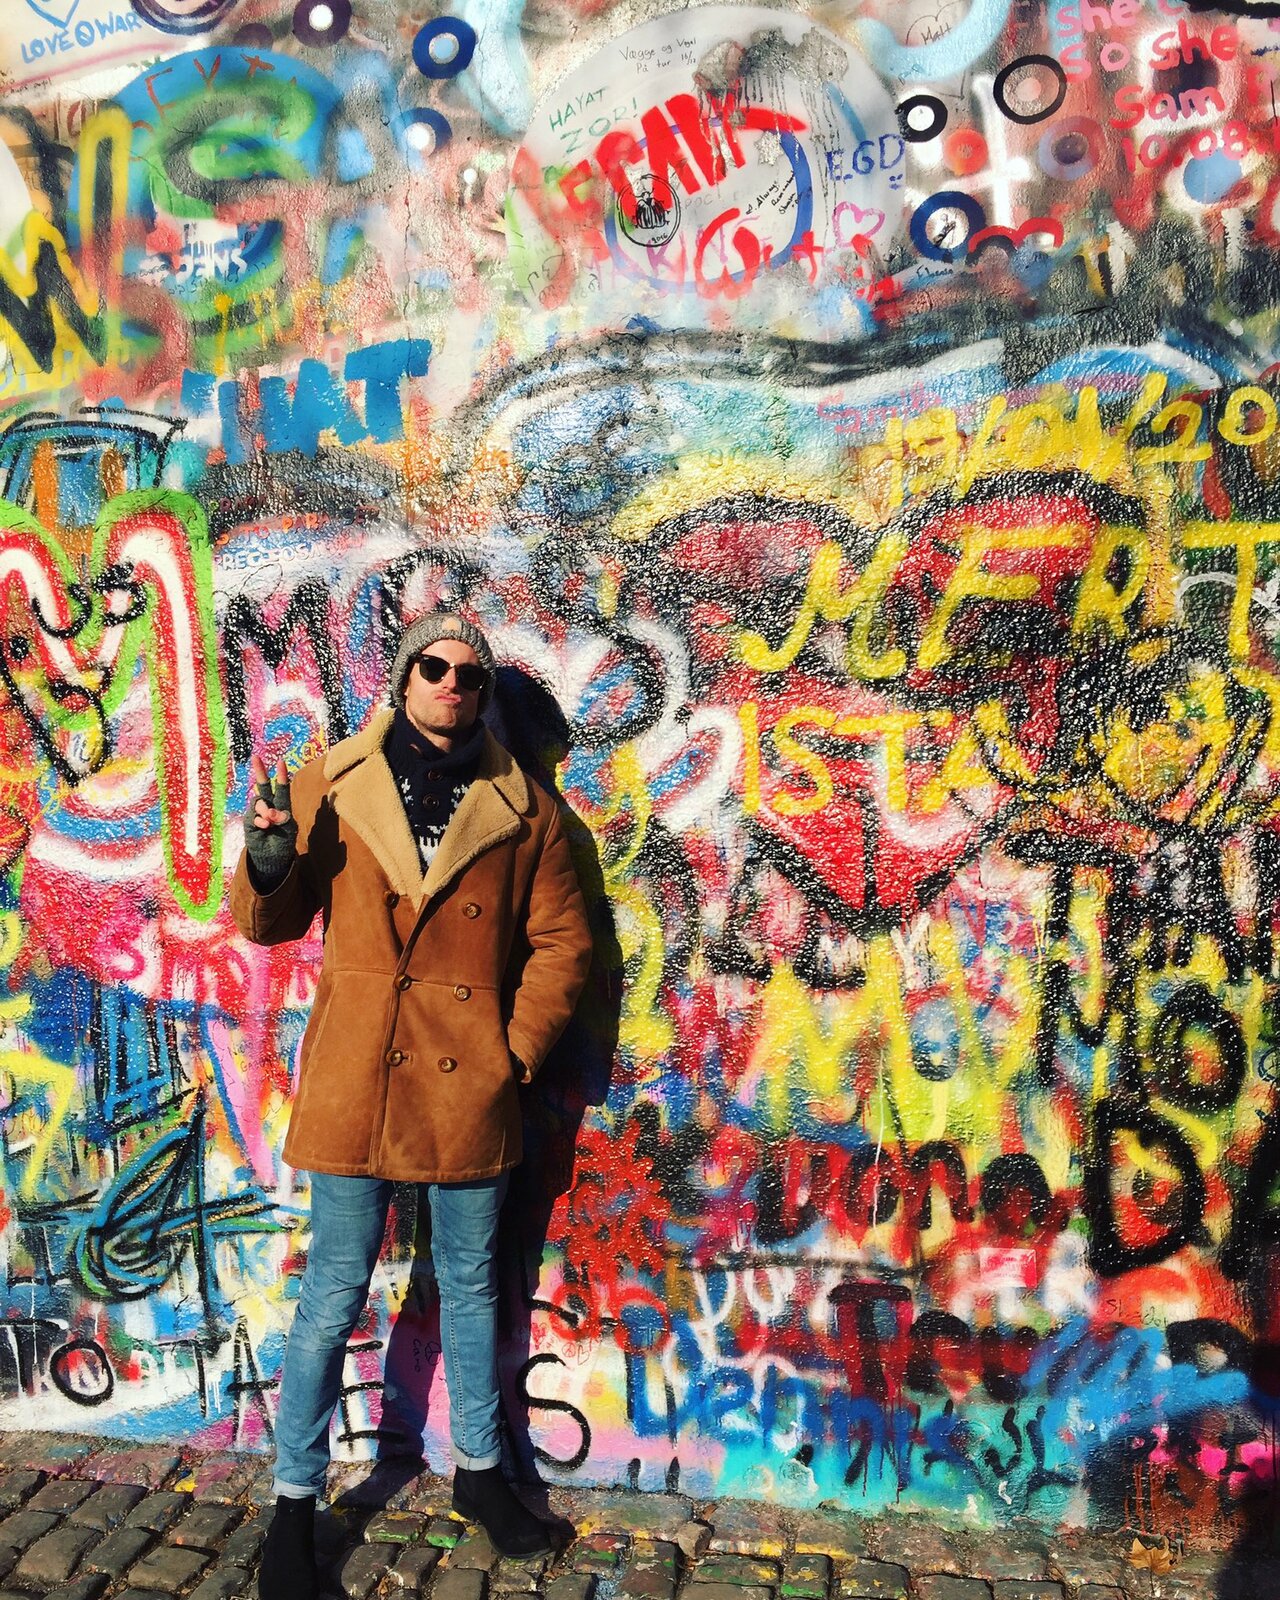 Some stunning #graffiti #art - The #JohnLennon wall! https://t.co/dXzxd2Ji12